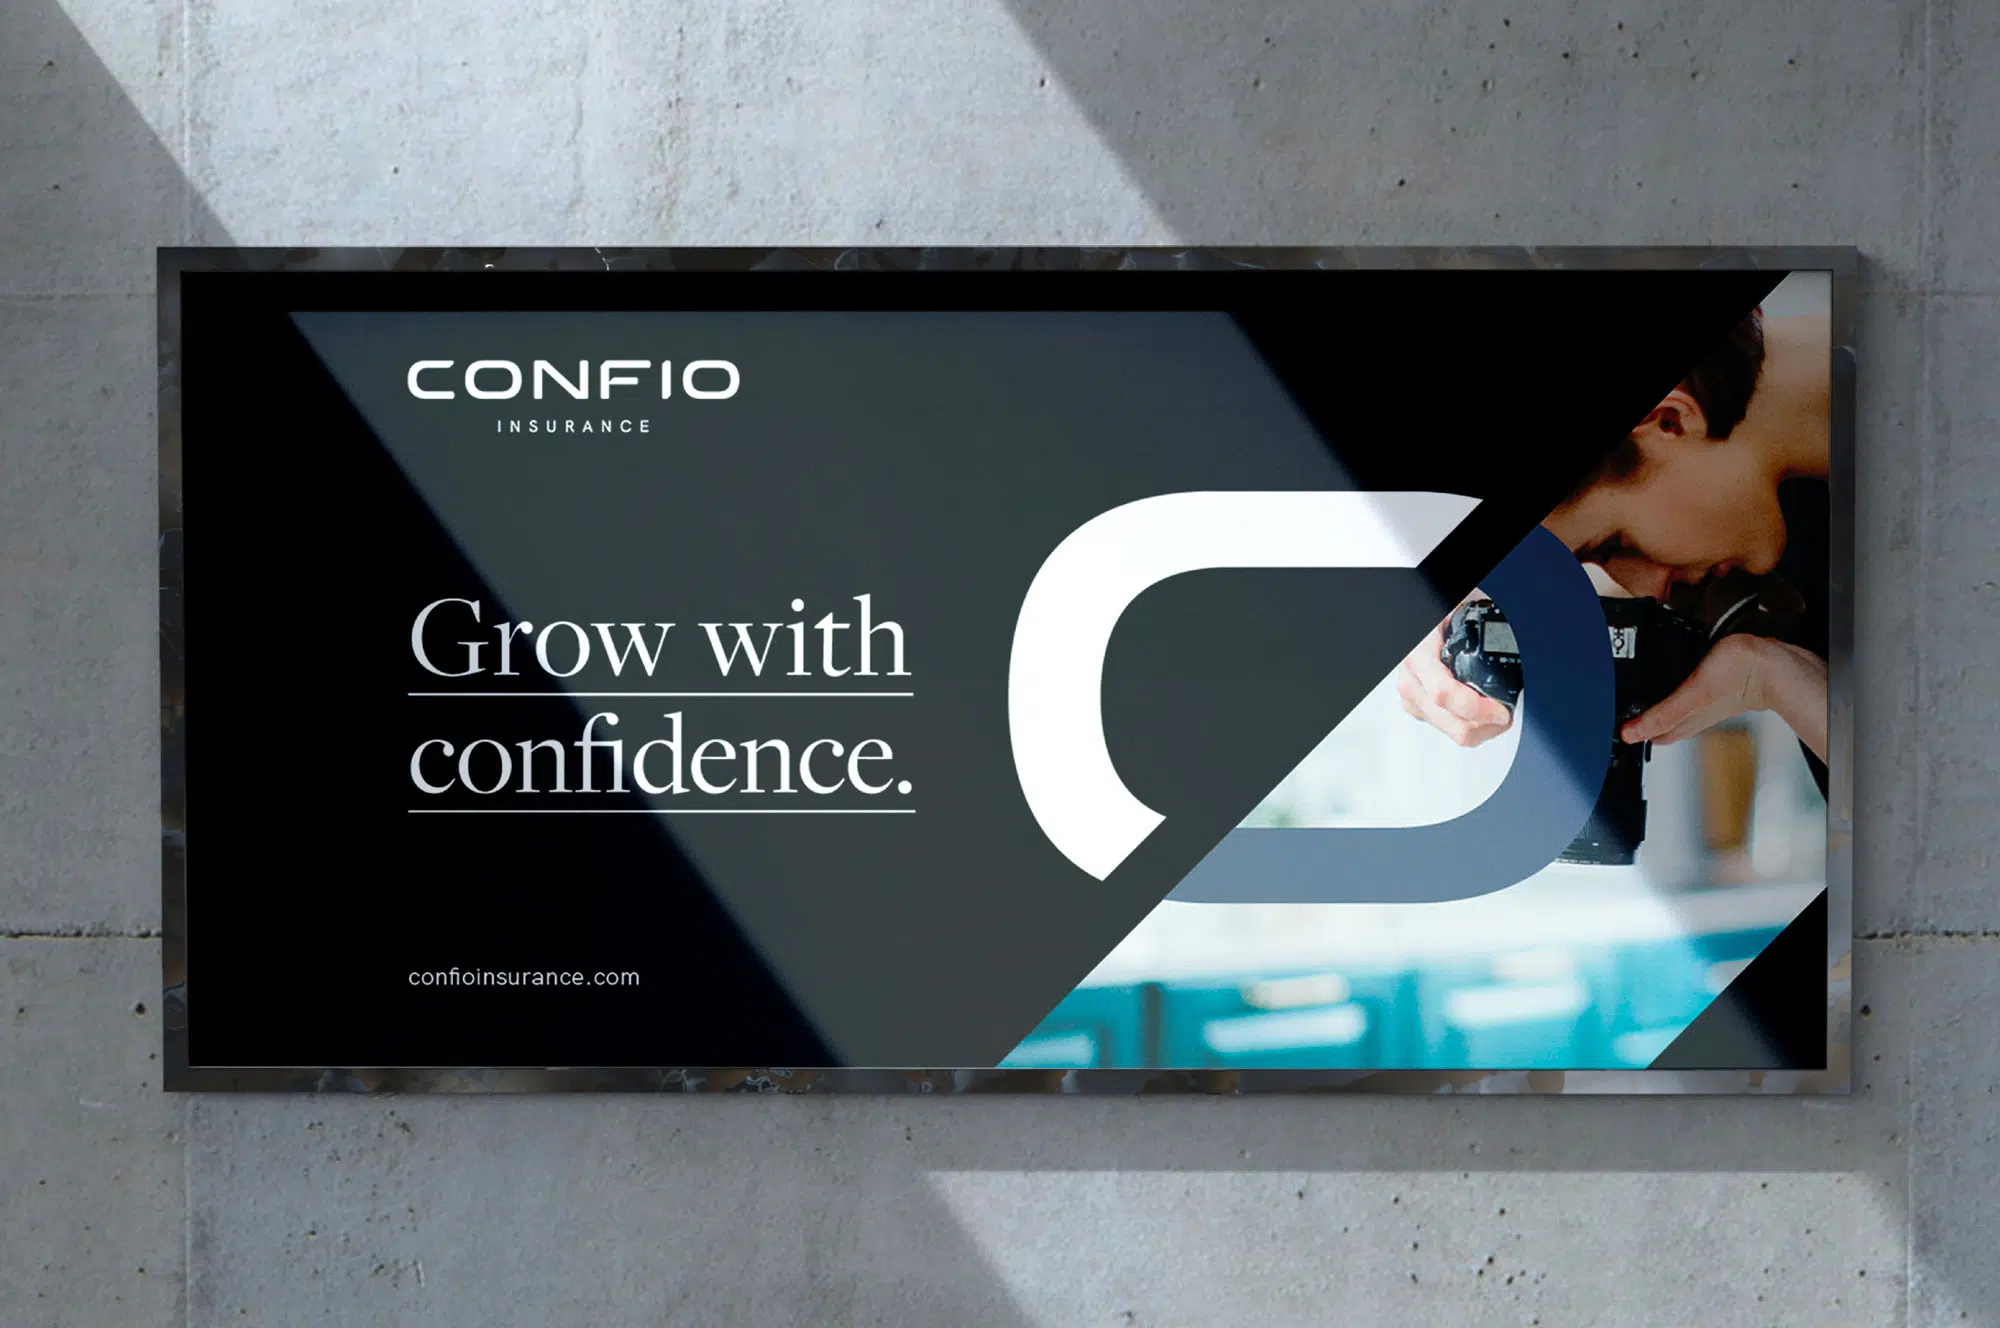 Confio Insurance Premium high end brand identity billboard